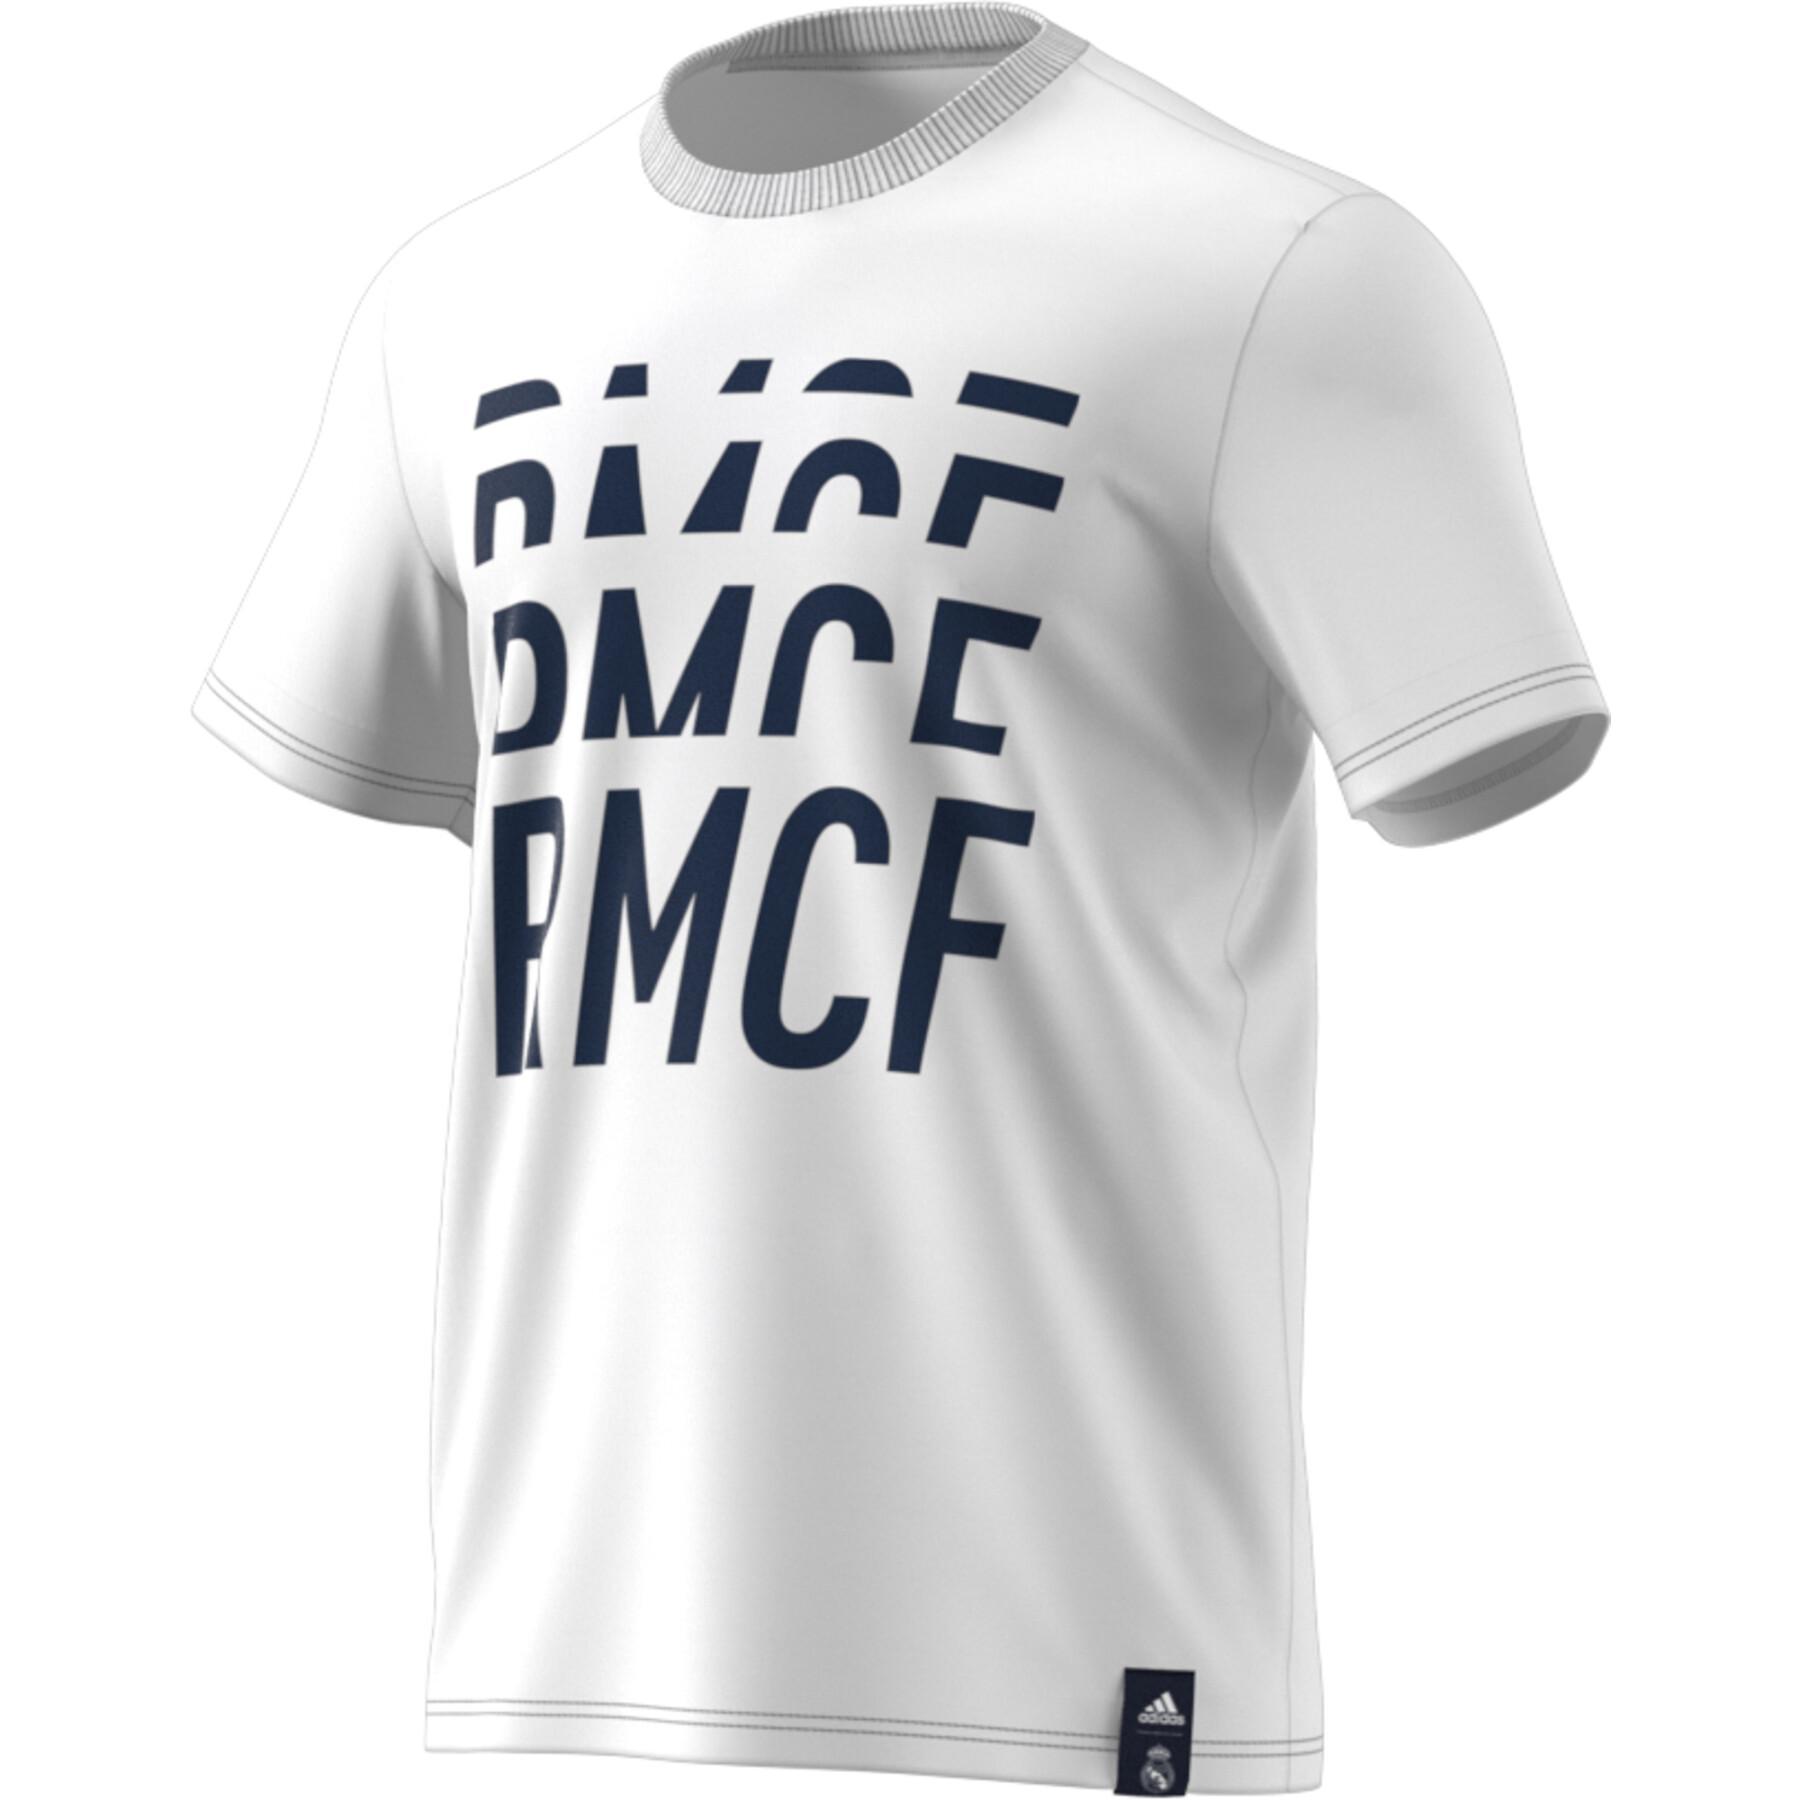 Camiseta Real Madrid DNA Graphic